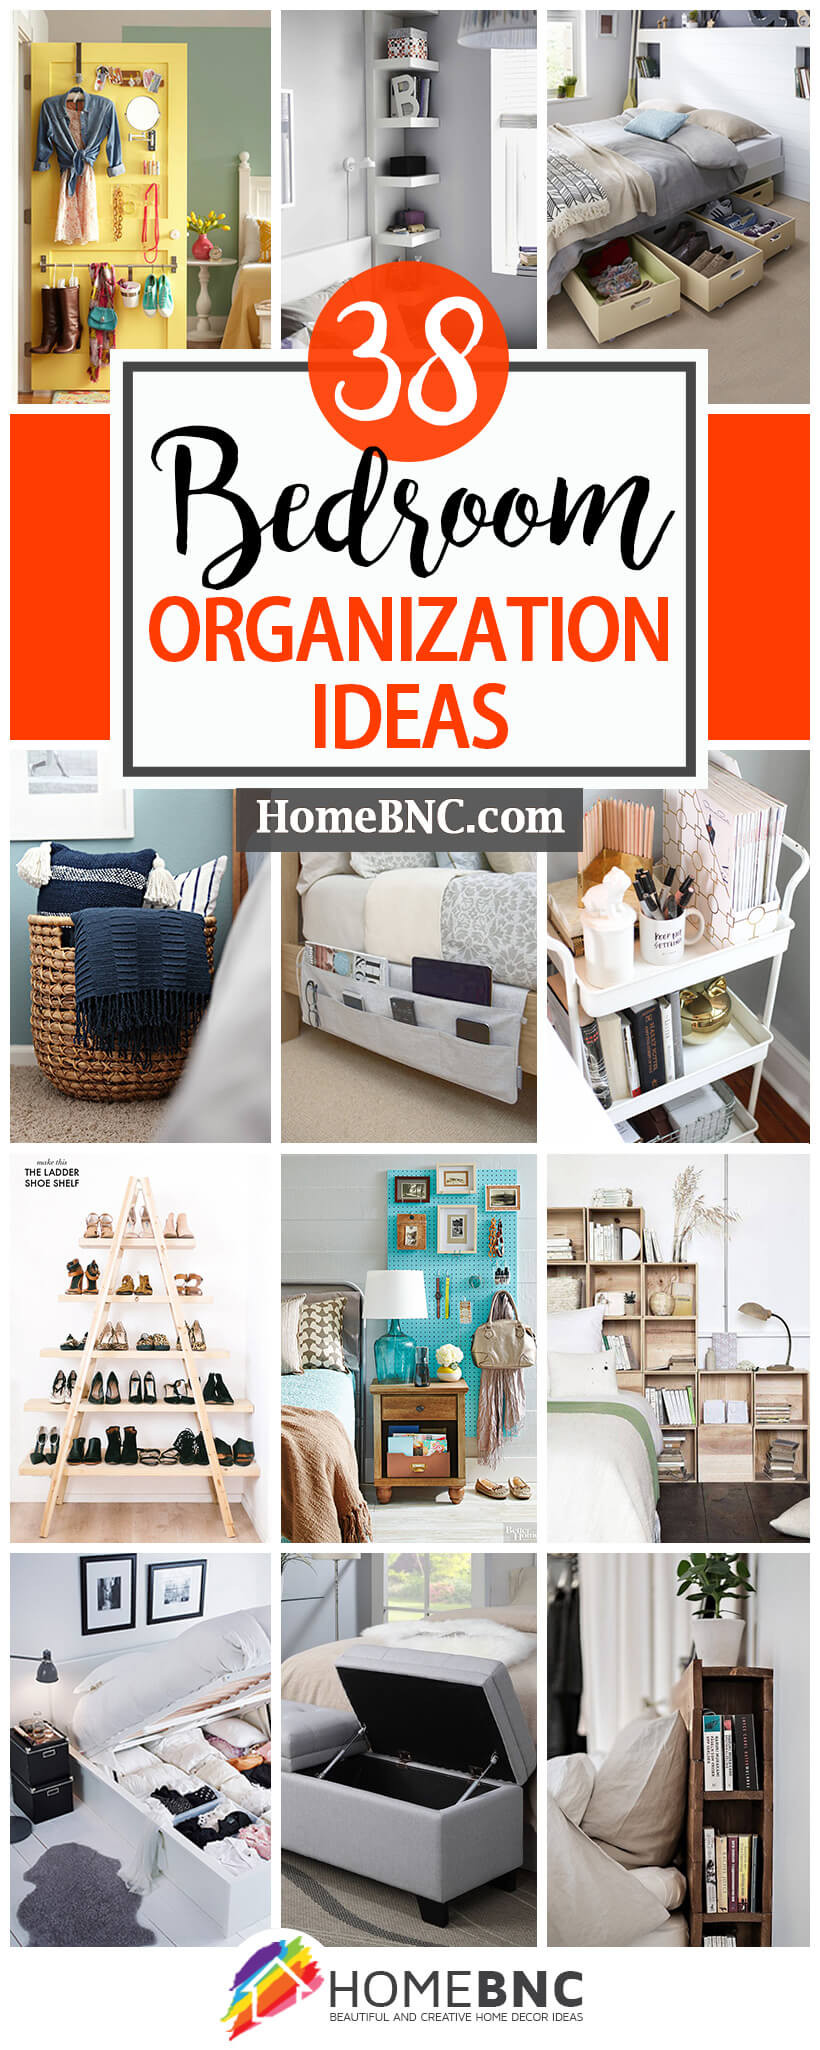 Organization Ideas For Bedroom
 38 Best Bedroom Organization Ideas and Projects for 2020